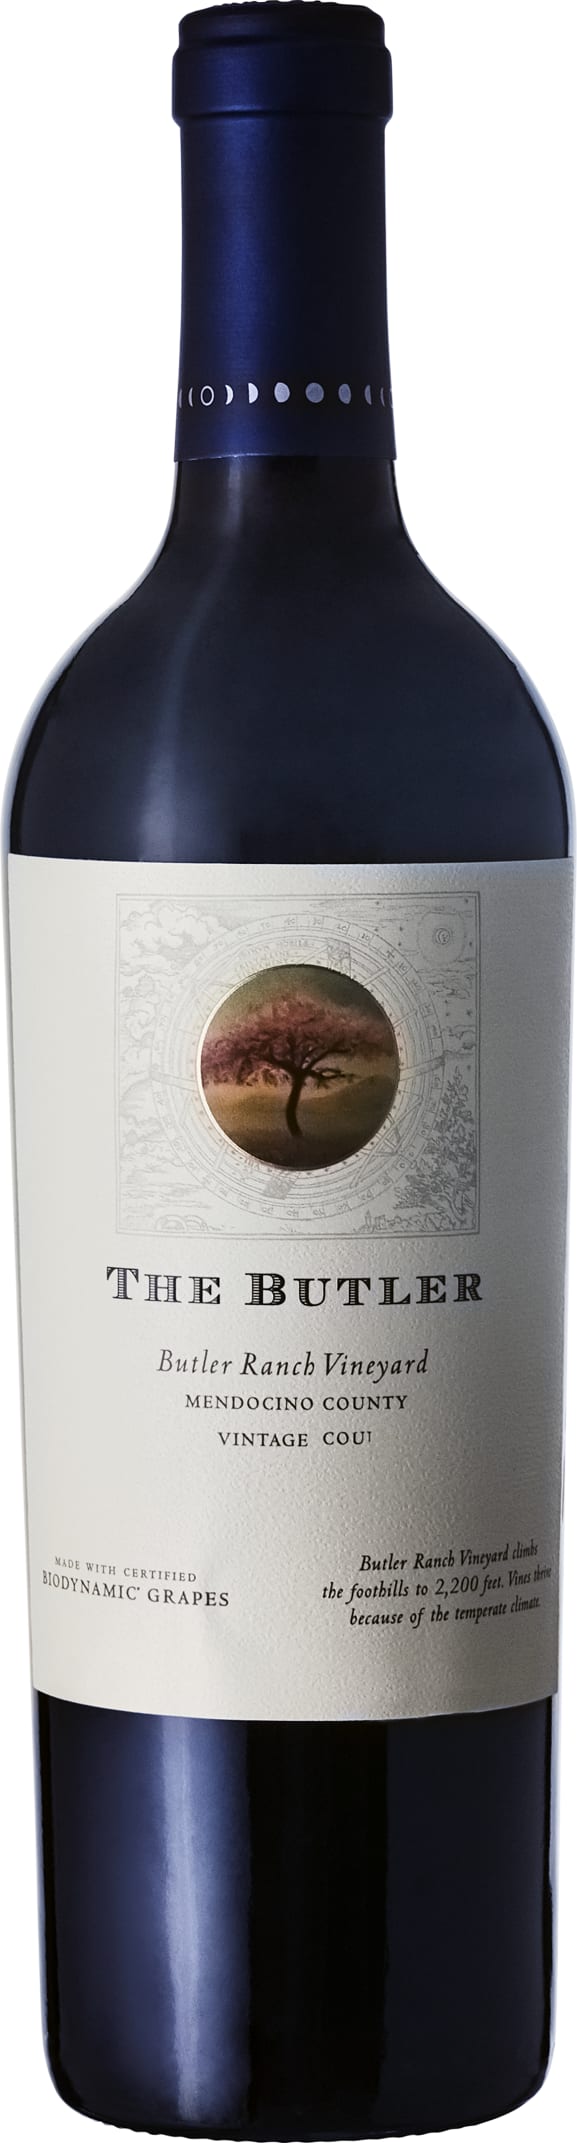 Bonterra The Butler Biodynamic Red 2017 75cl - Buy Bonterra Wines from GREAT WINES DIRECT wine shop